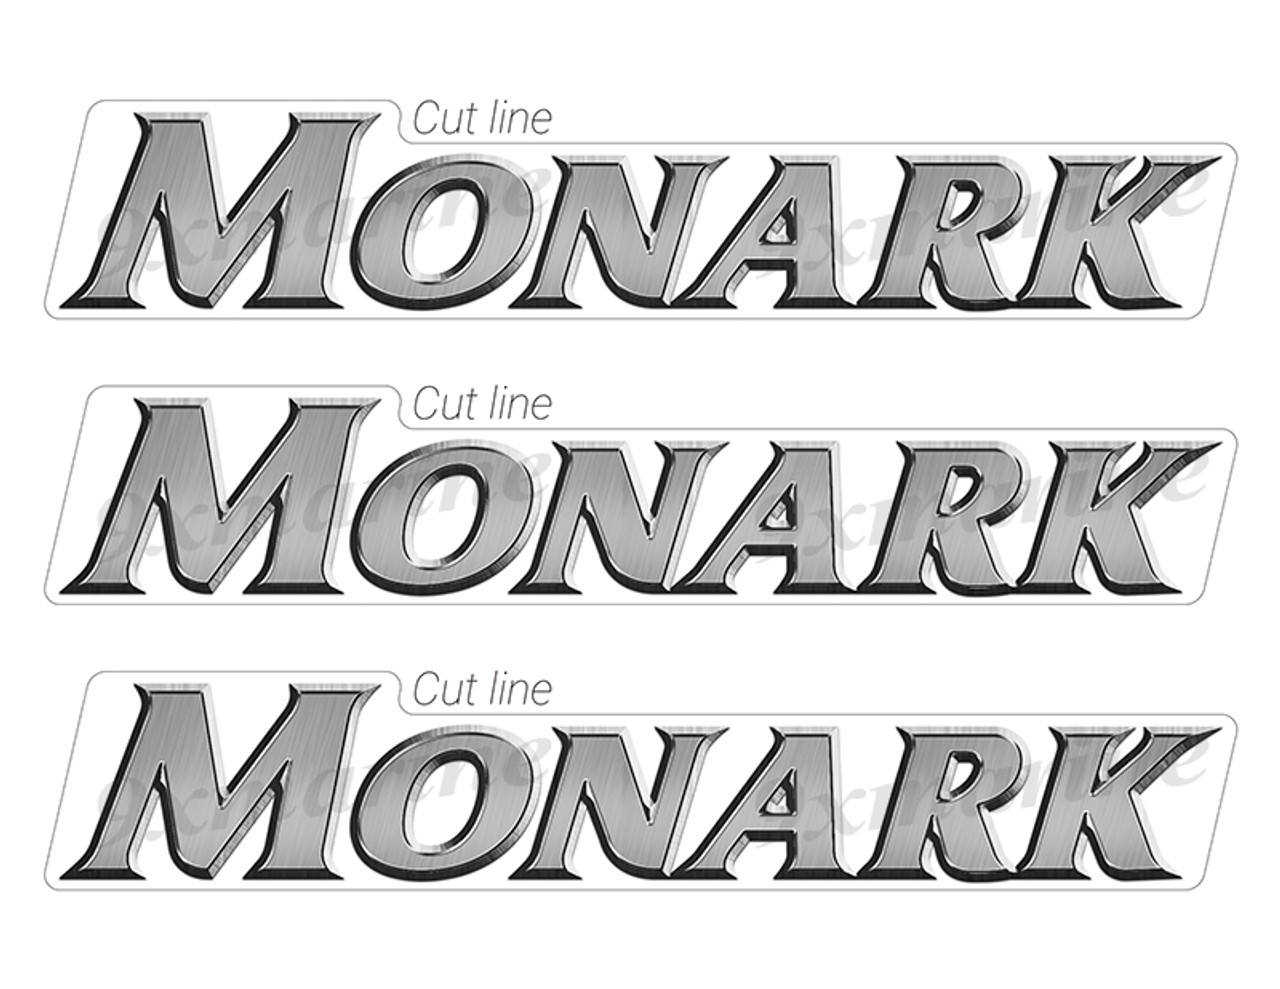 3 MonArk Designer Stickers. Brushed Metal Style - 10" long. Remastered